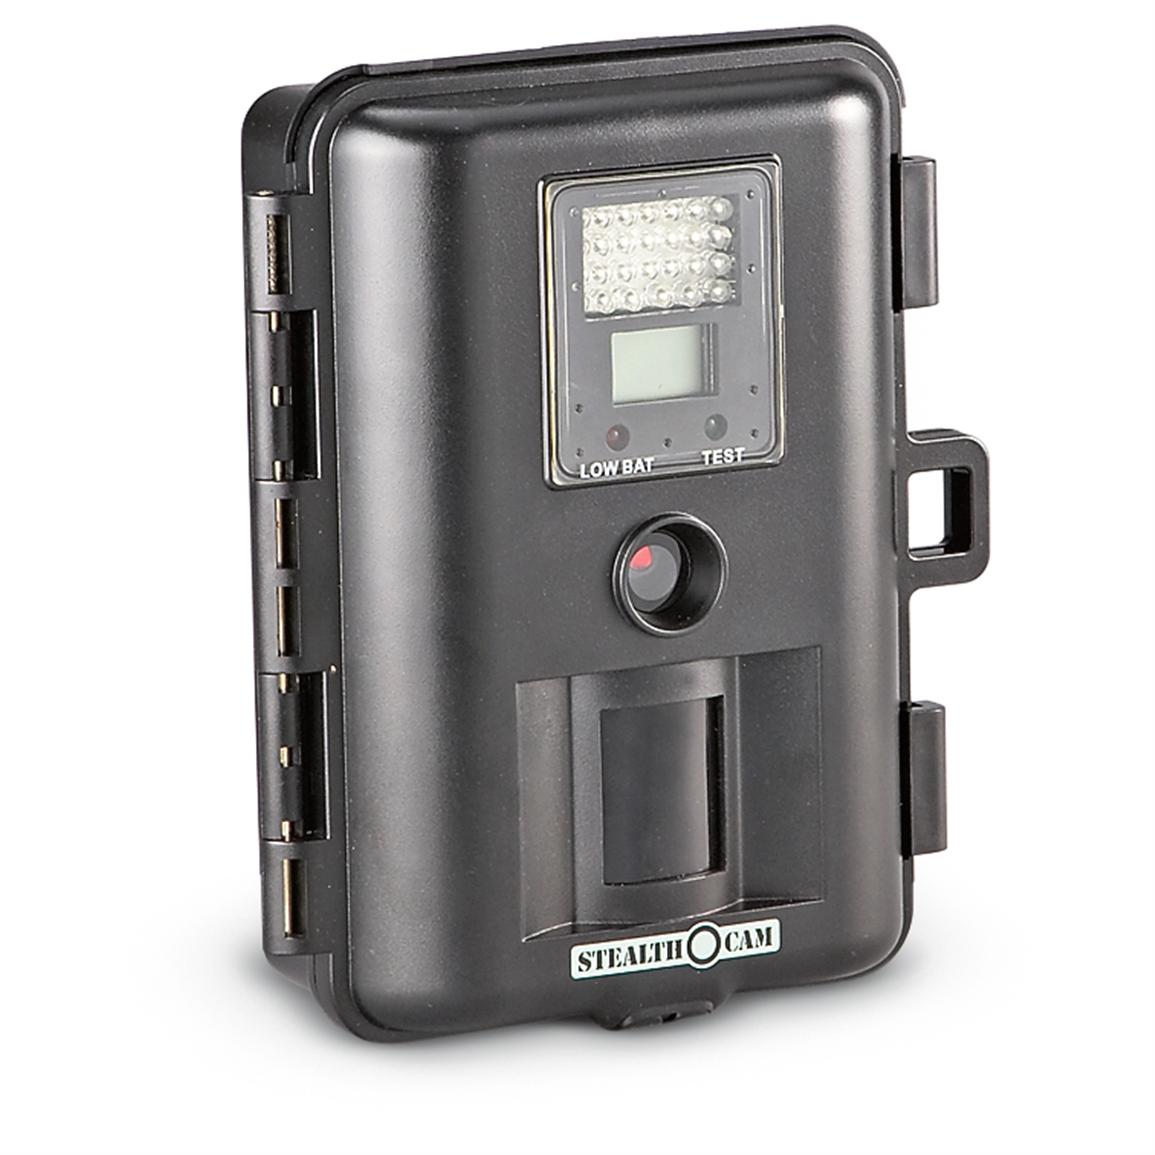 StealthCam™ 5.0 MP Digital IR Scouting Camera